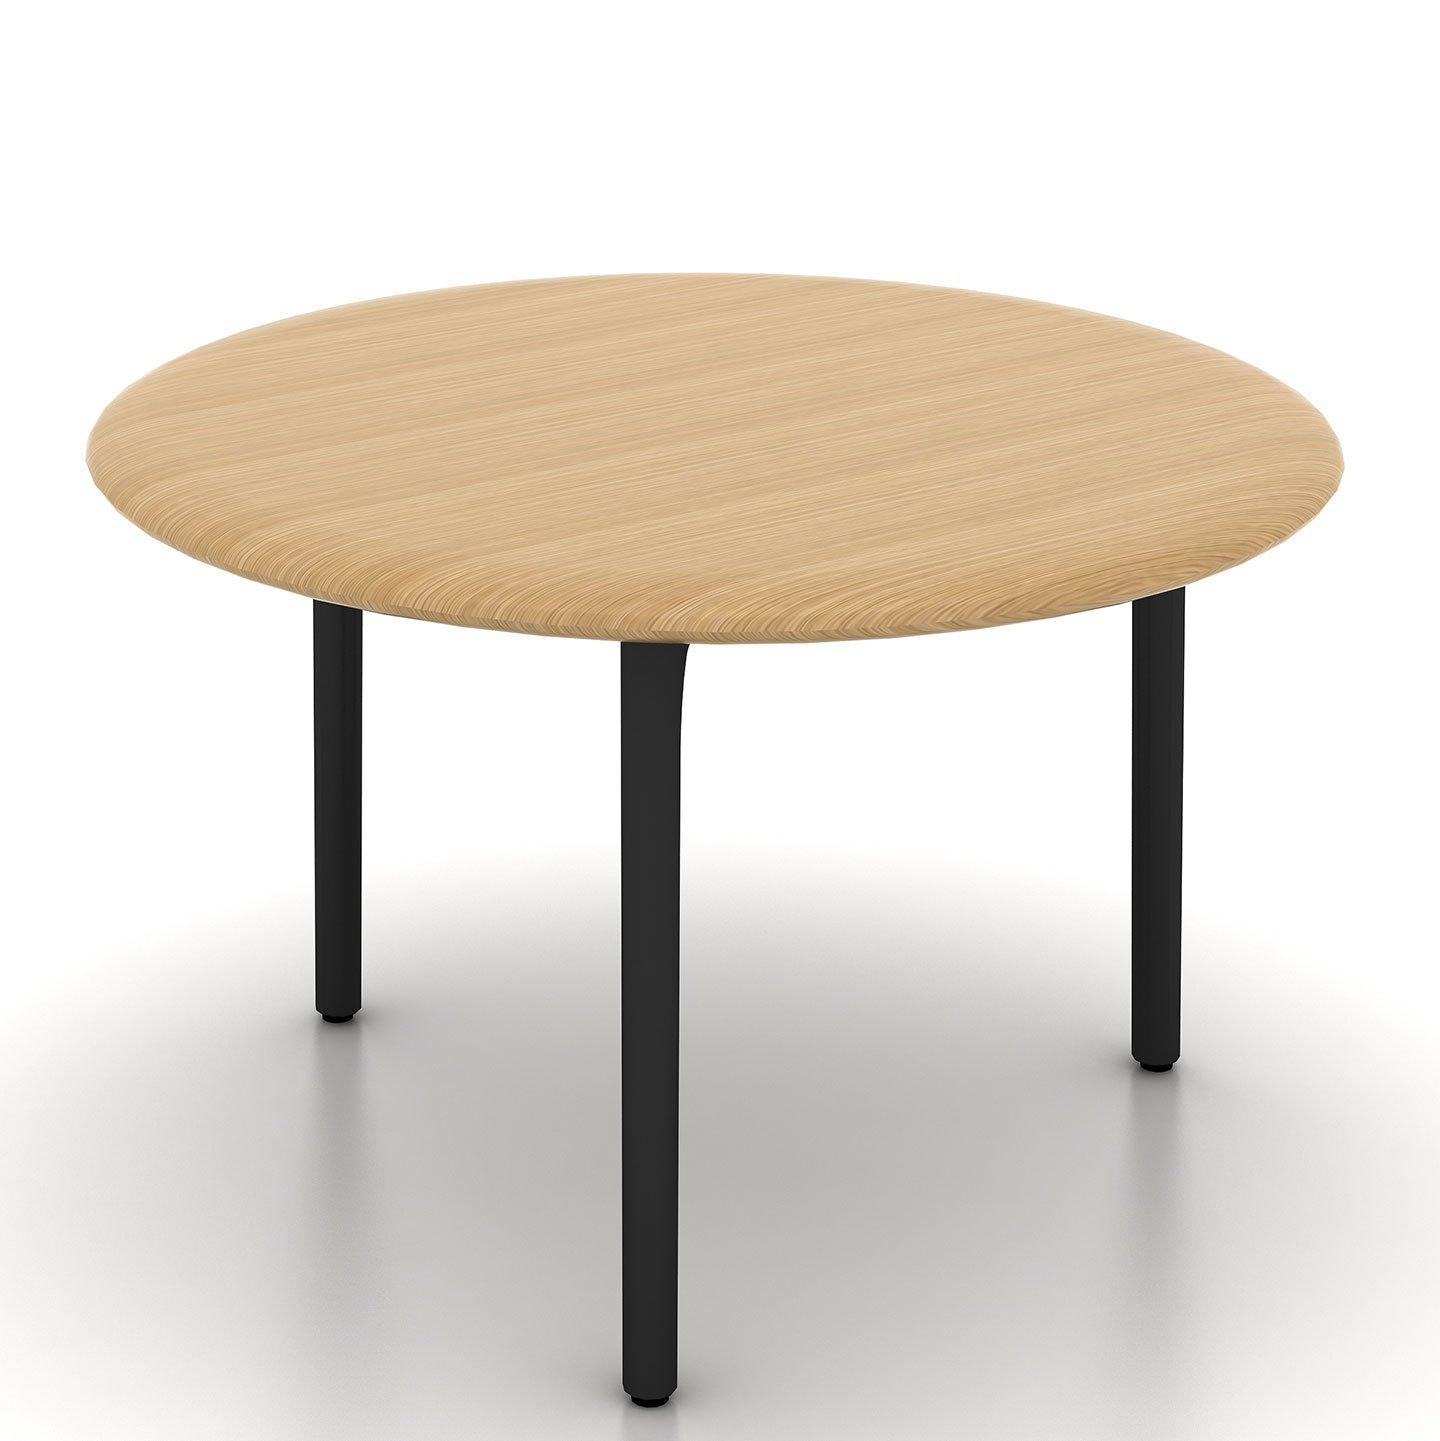 Haworth Openest Sprig Side Table White Oak Hardwood circular top with three legs